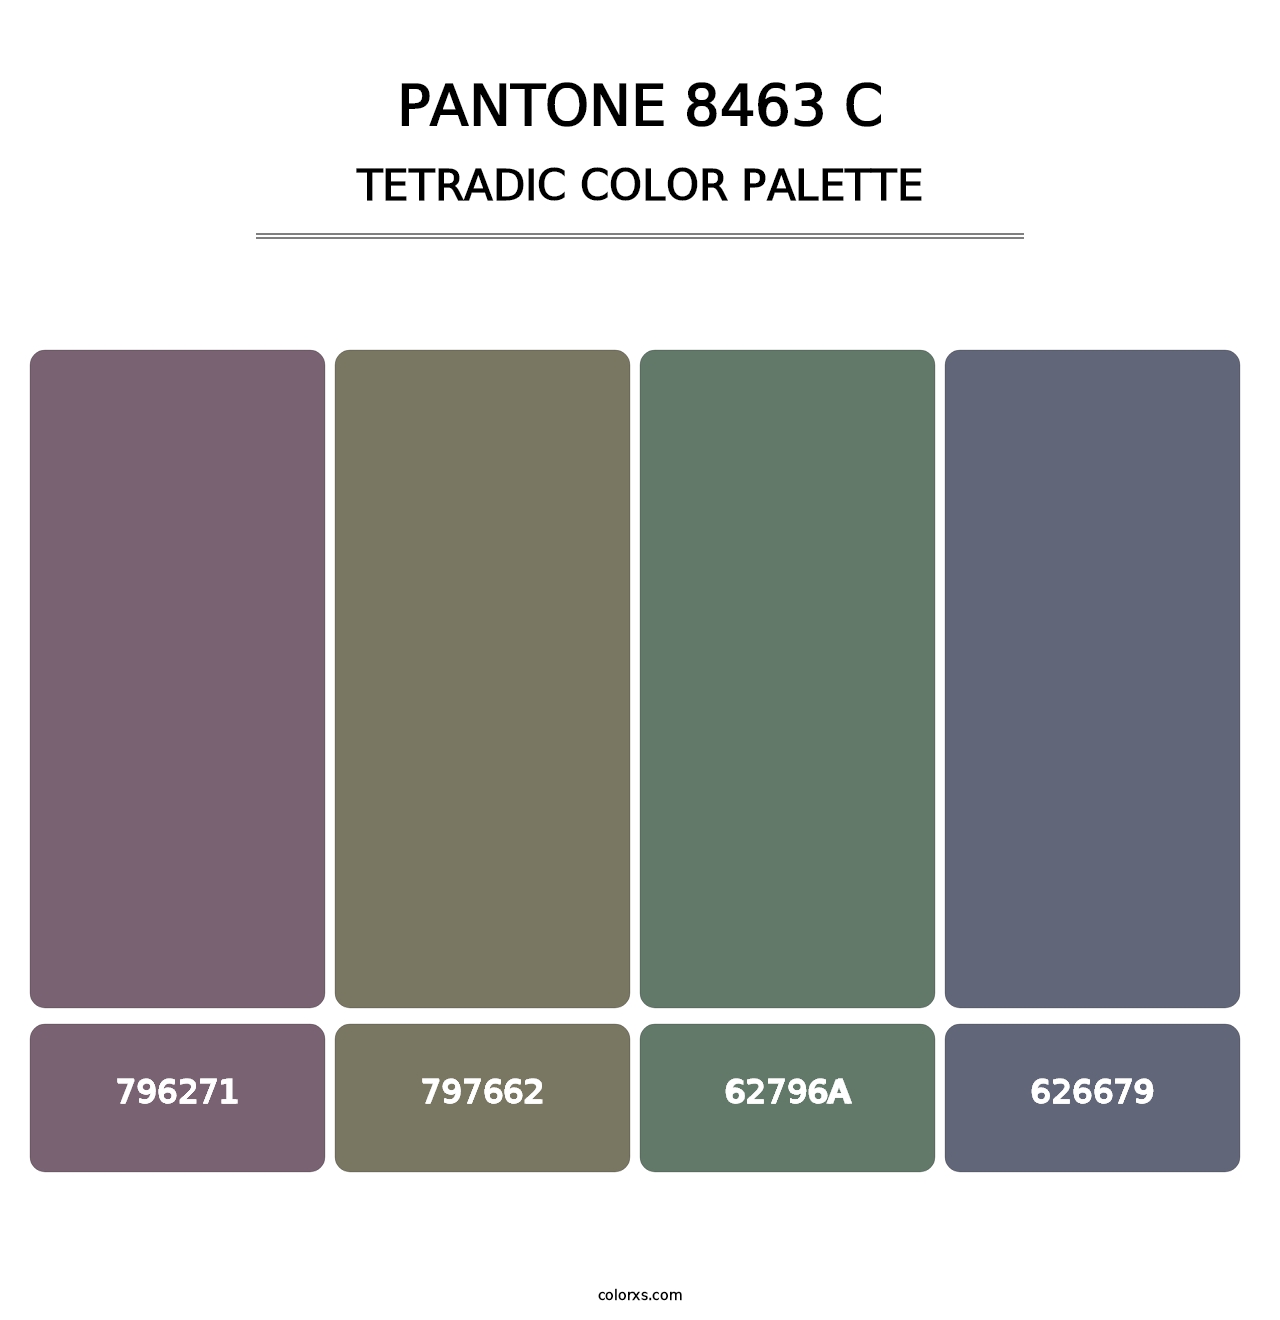 PANTONE 8463 C - Tetradic Color Palette